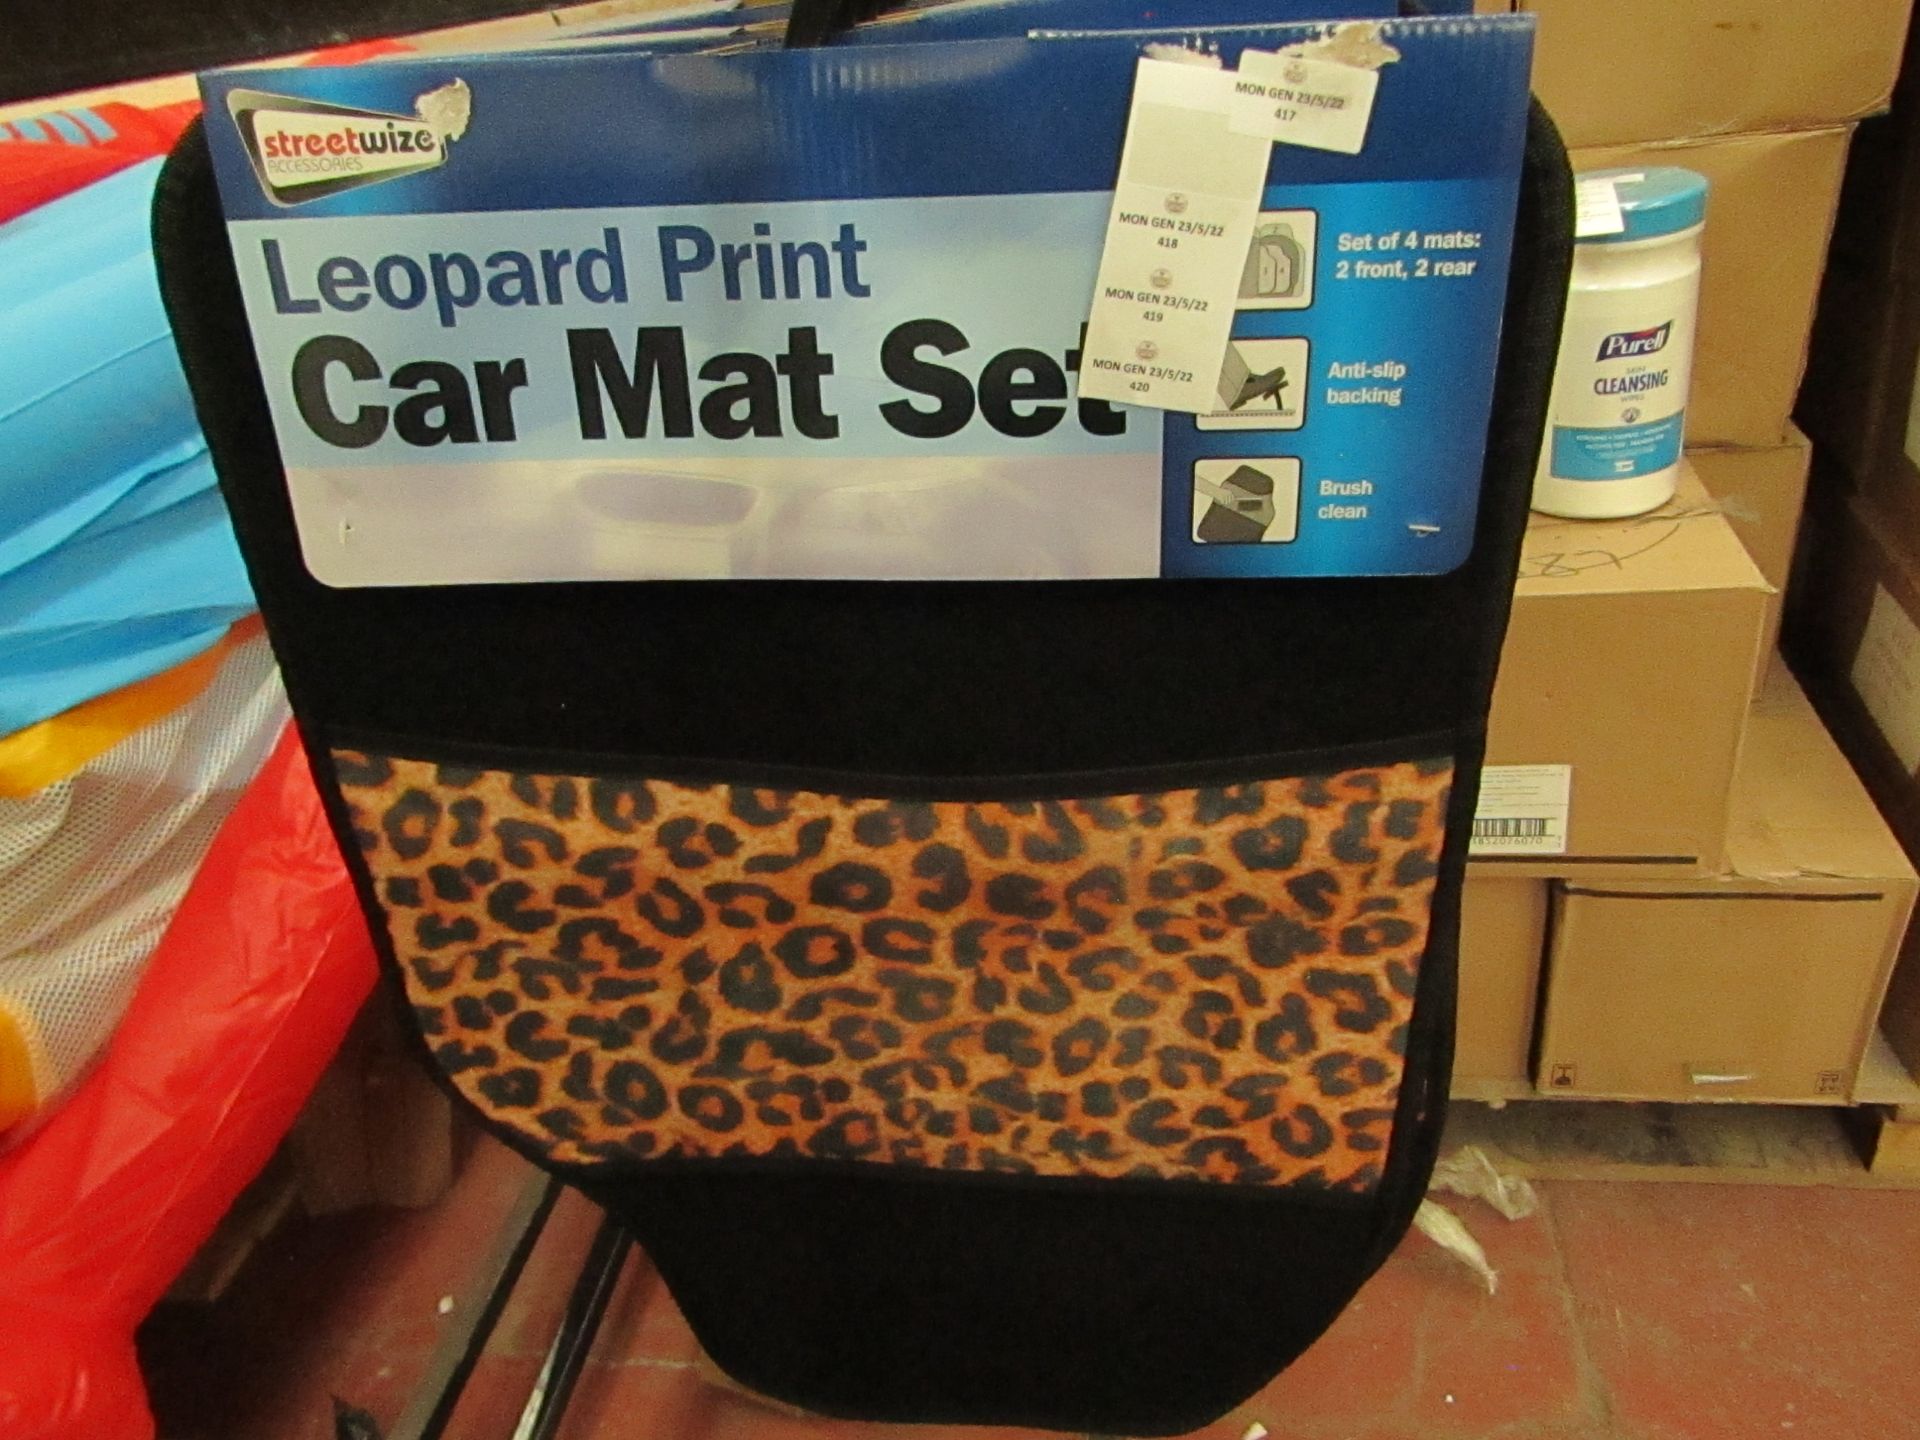 Streetwize - Leopard Print 4-Piece Car Mat Set - Good Condition, Unused.